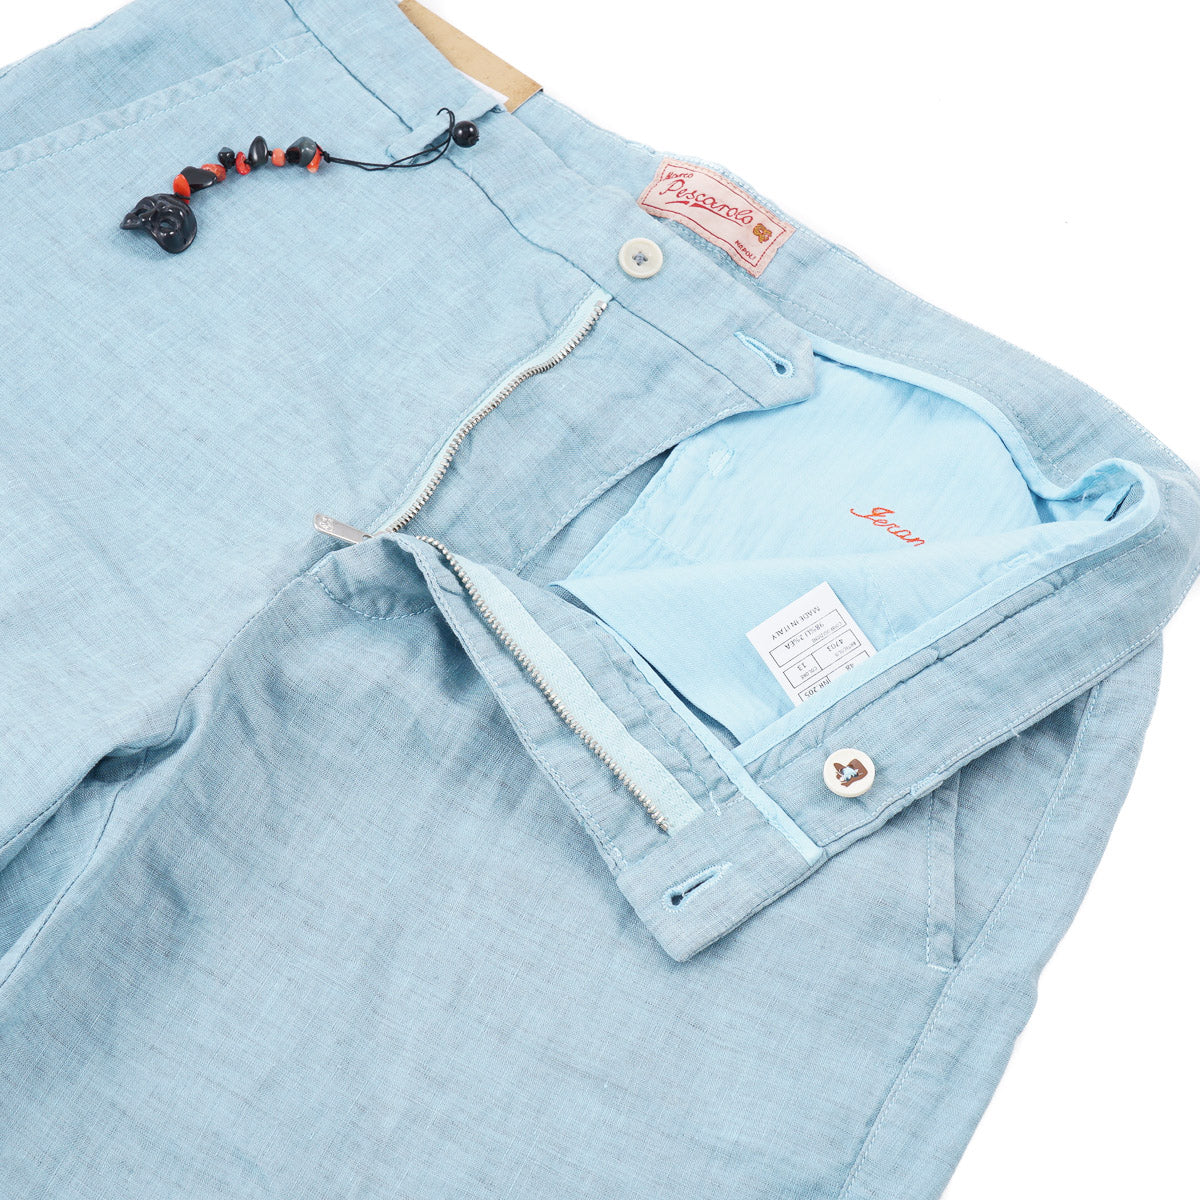 Marco Pescarolo Aqua Linen Shorts - Top Shelf Apparel